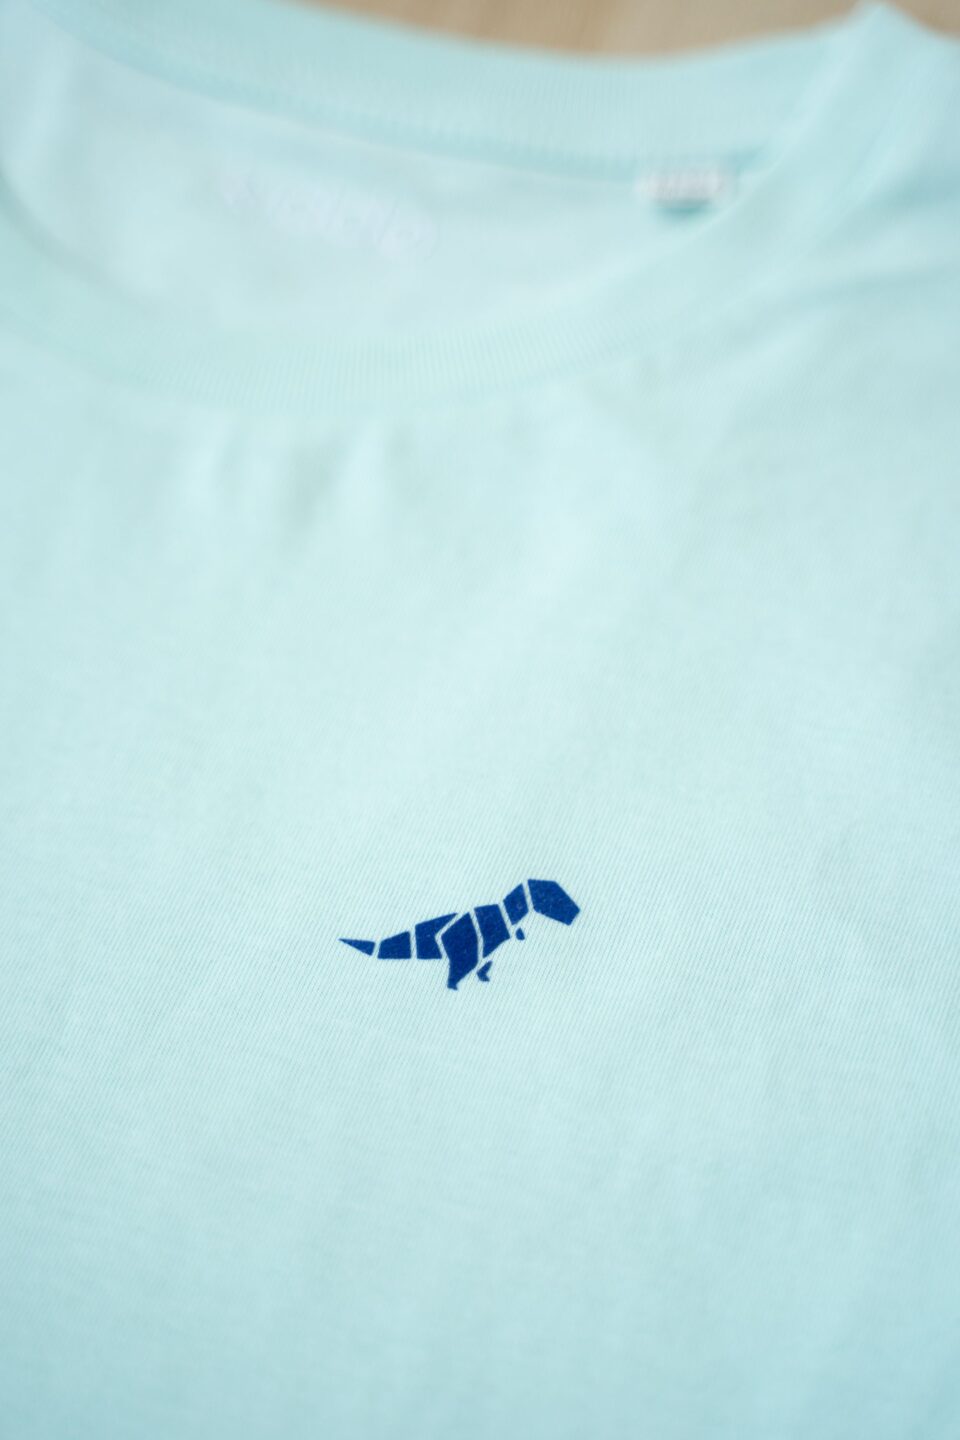 Kiddo_Kids Shirt_Minimal_Tropical Blue_T-rex